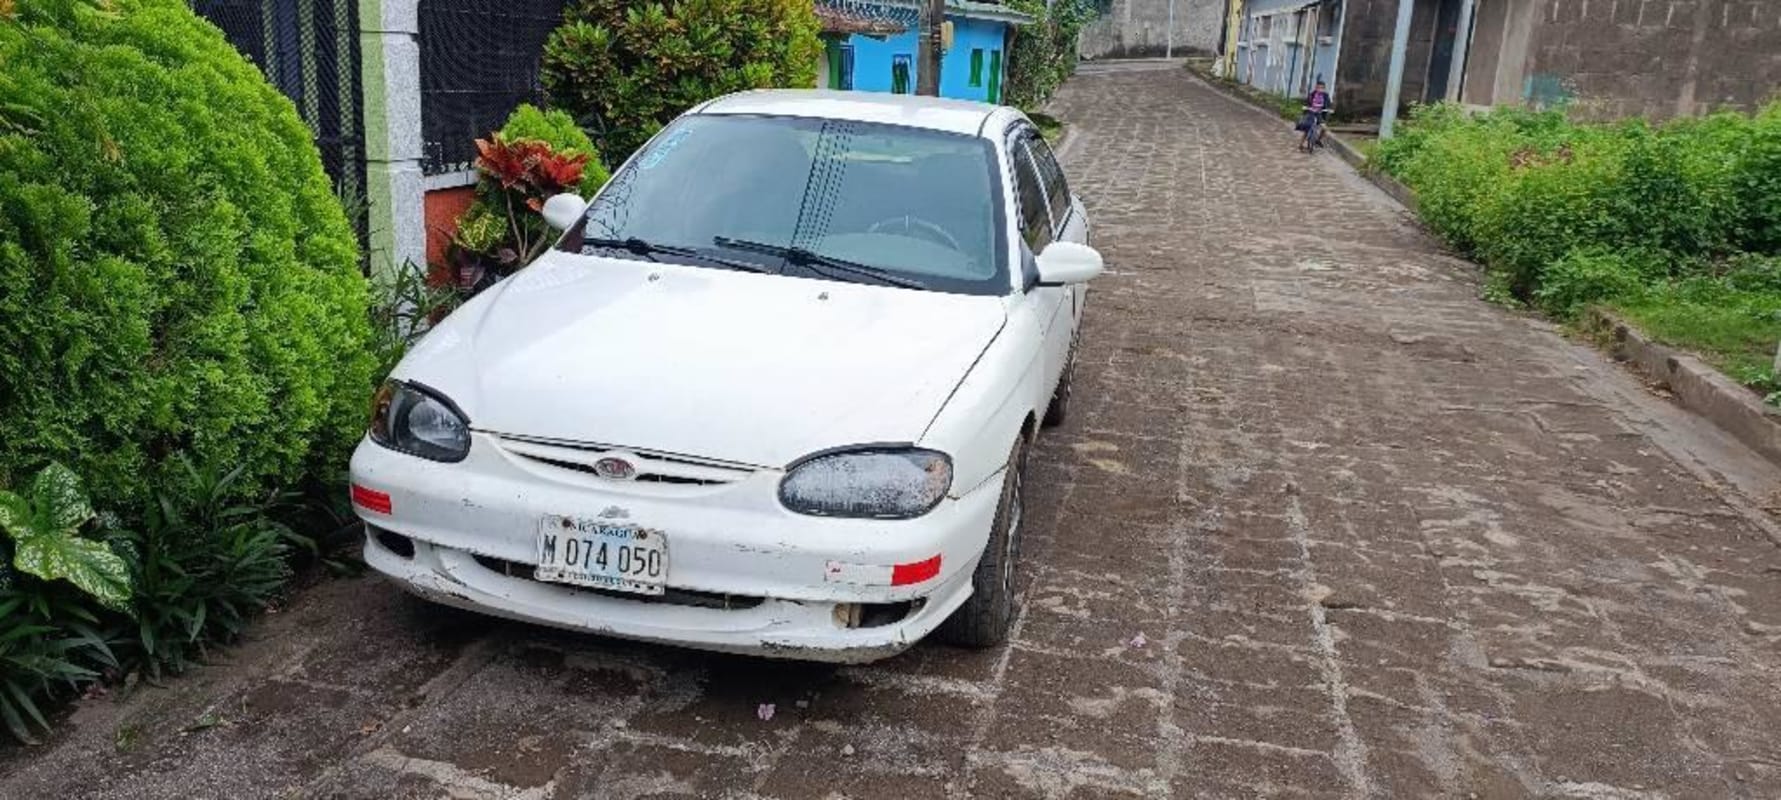 Used Car | Kia Sephia Nicaragua 1999 | Kia sephia 99